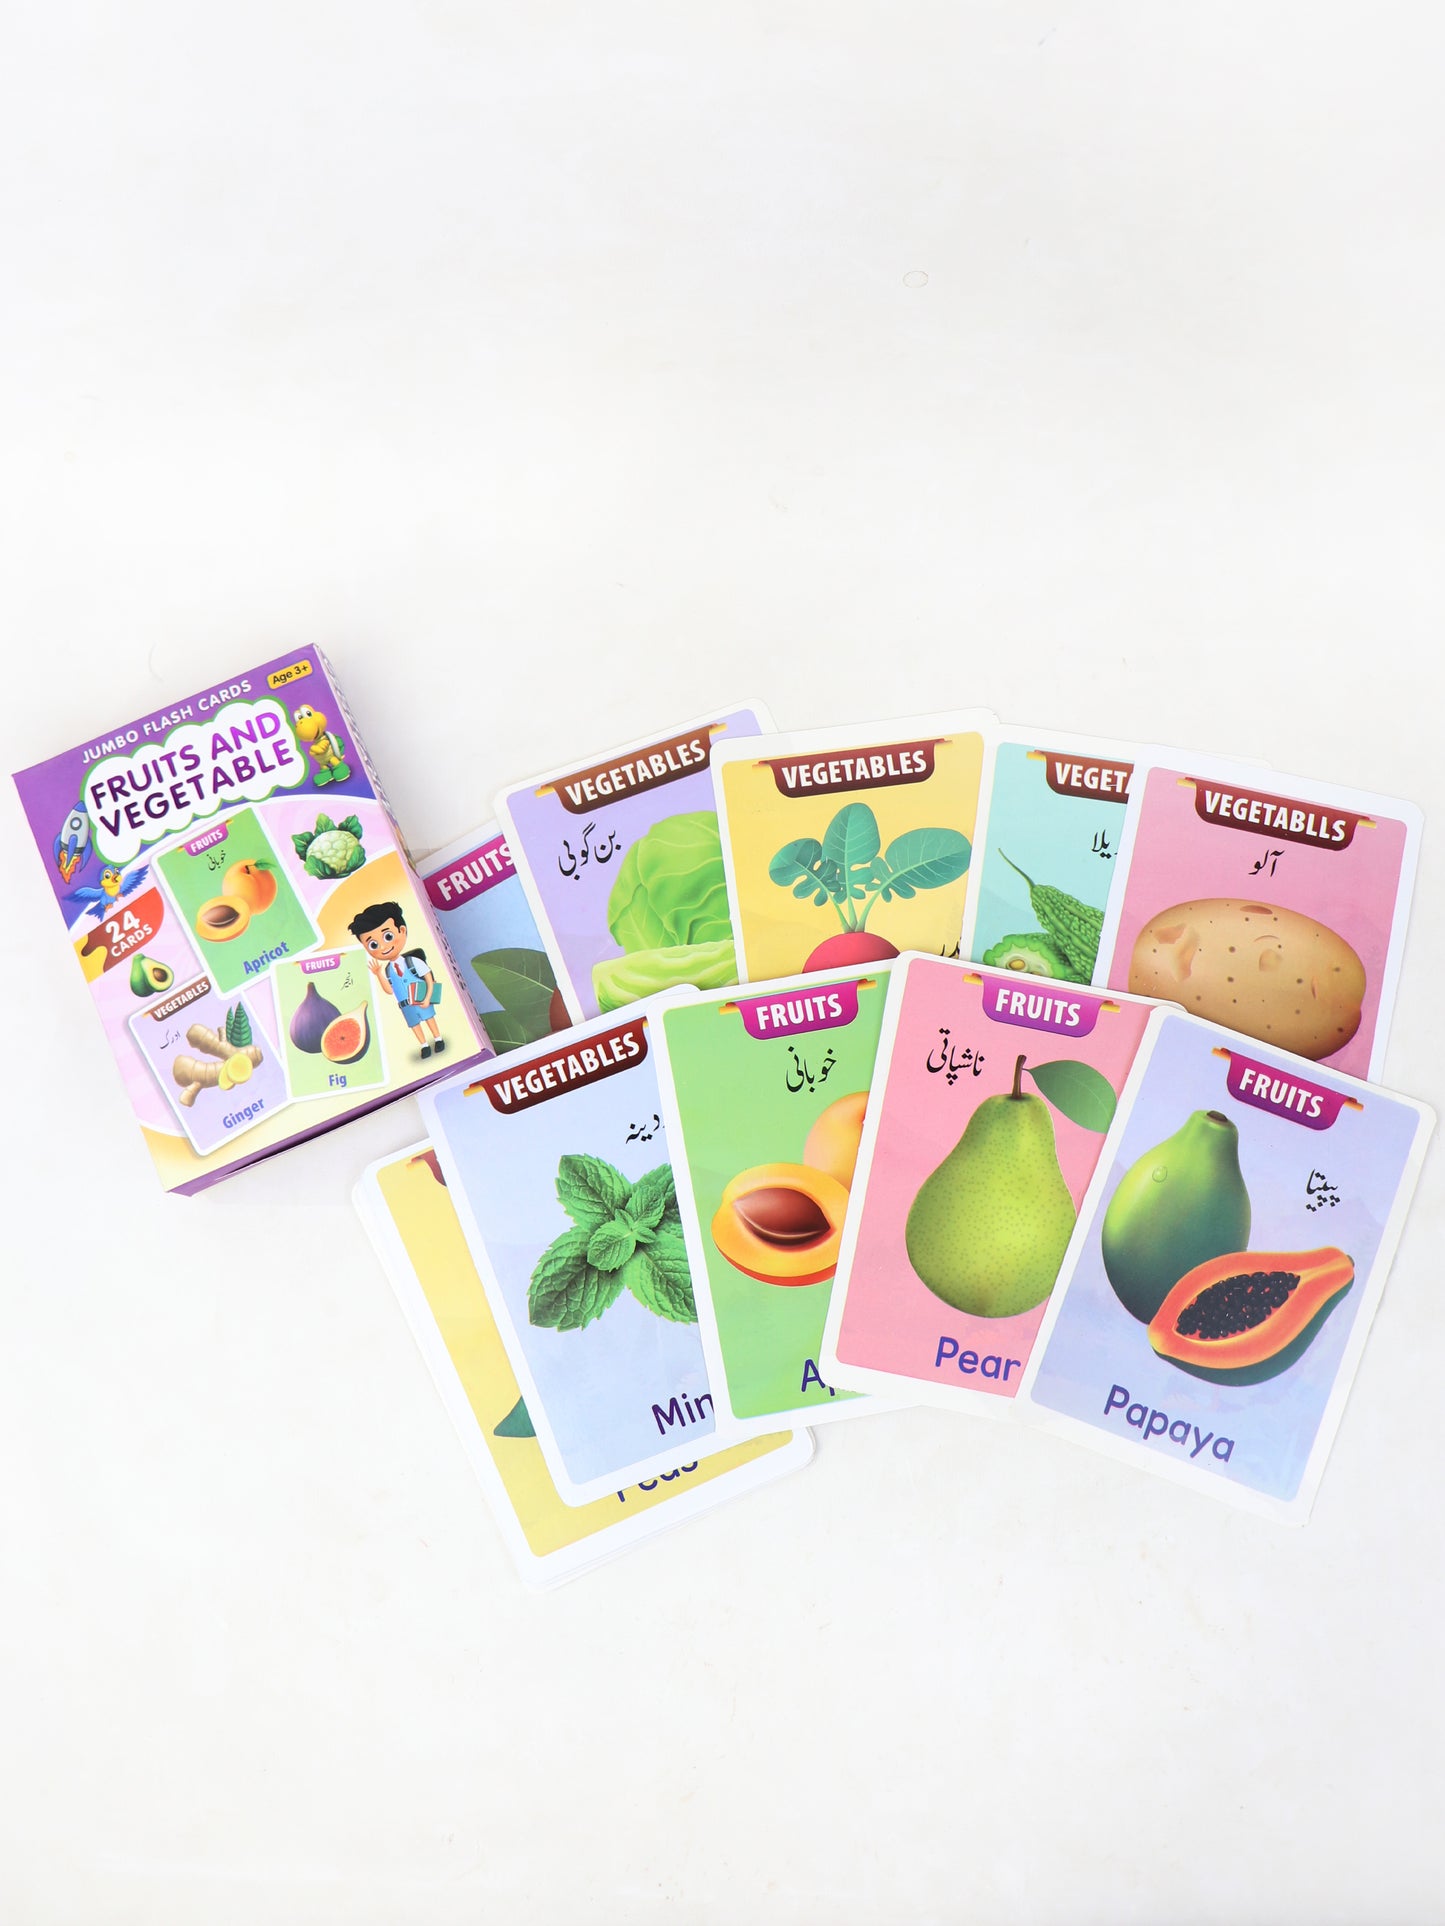 Fruits & Vegetables 24 Jumbo Flash Cards